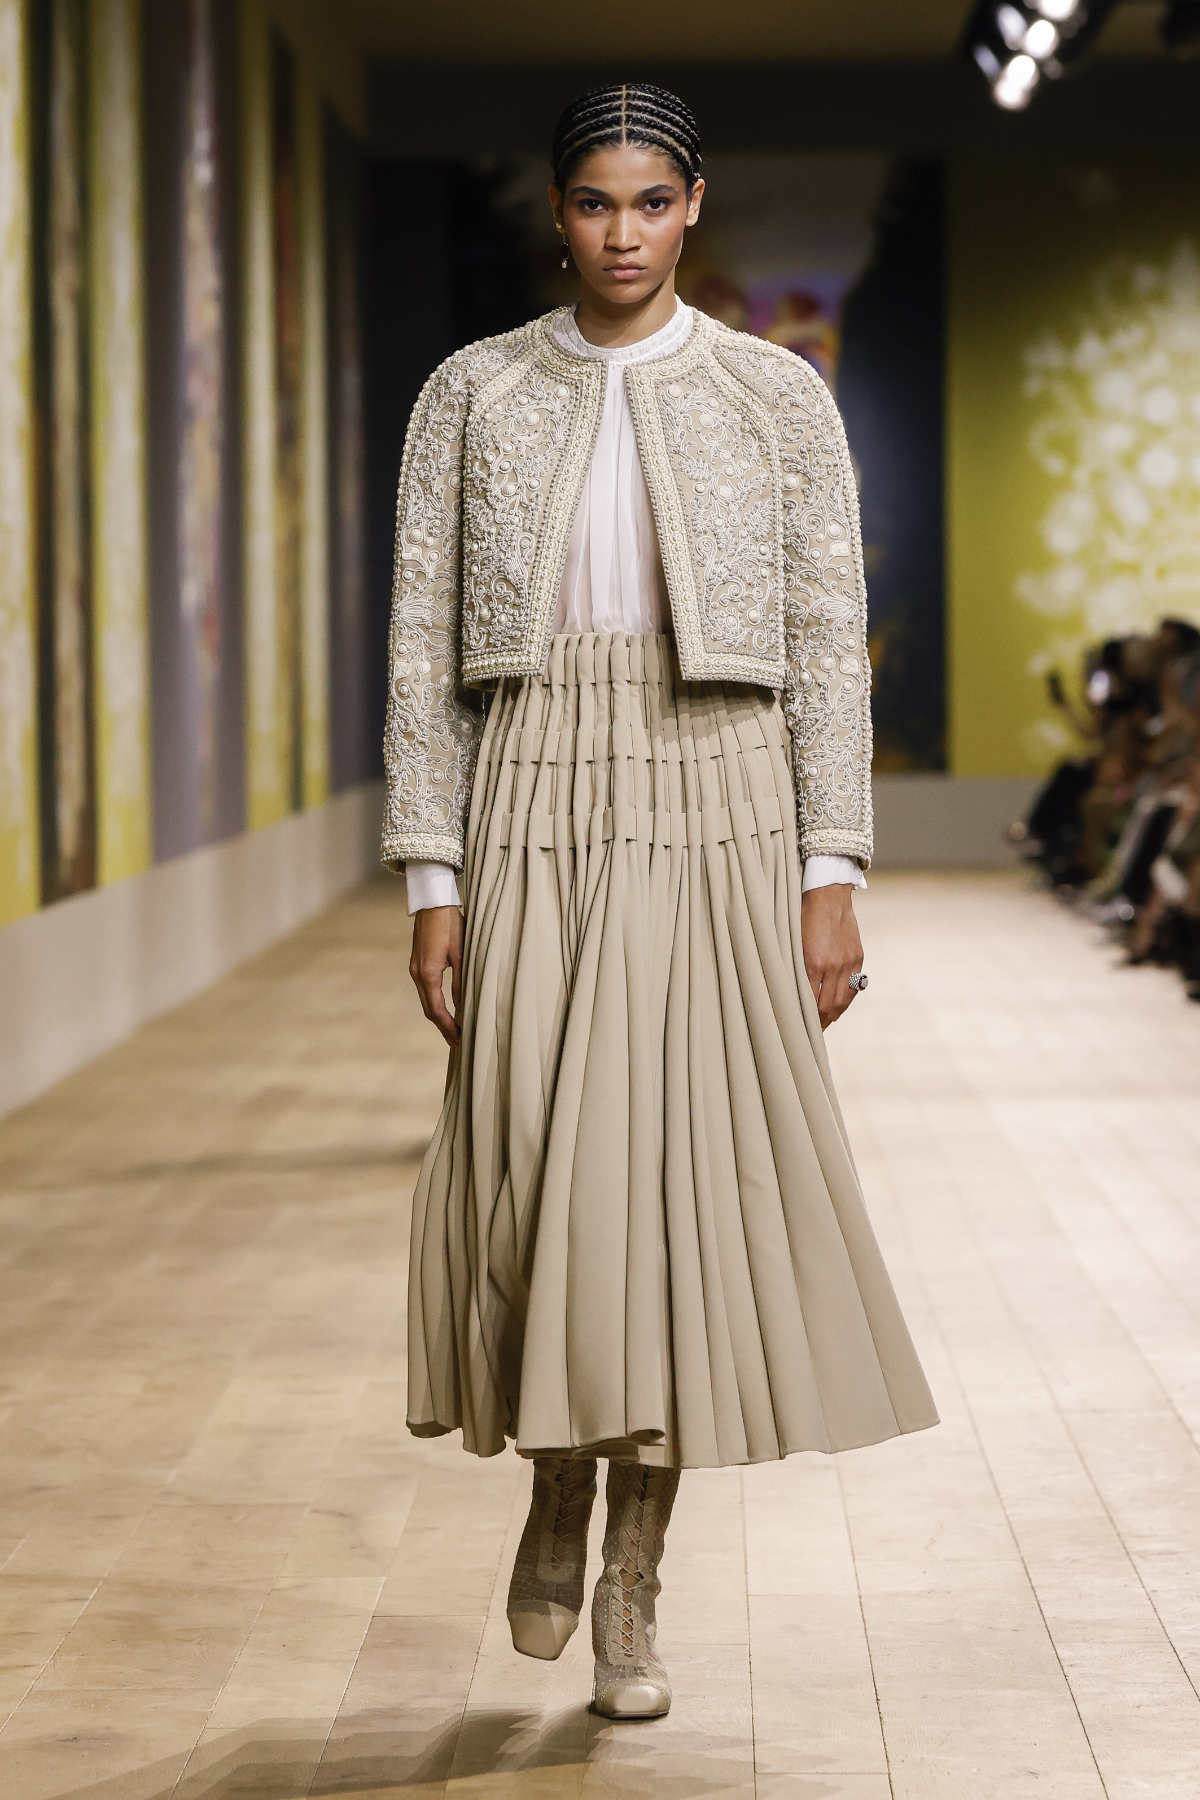 Dior: Dior Maison Presents Its New Dioriviera 2022 Collection - Luxferity